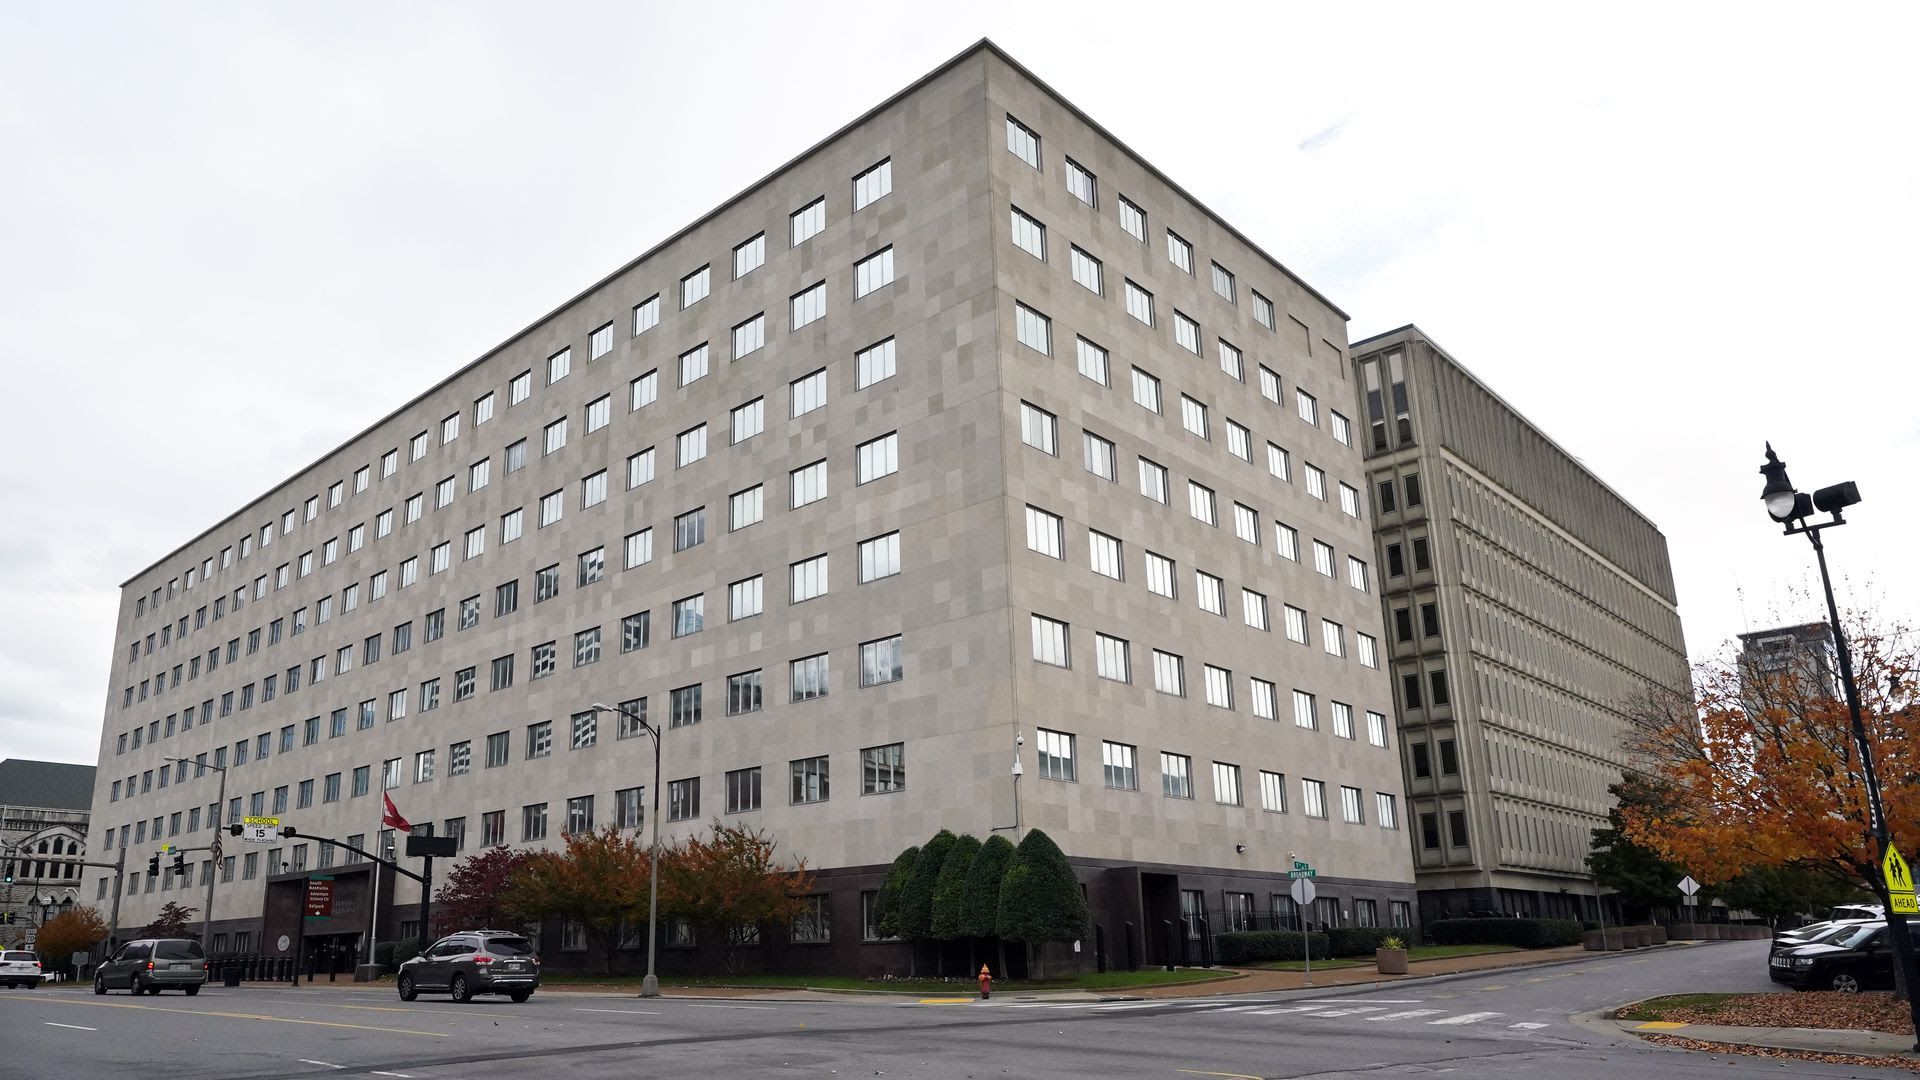 The Estes Kefauver Federal Building in Nashville. 